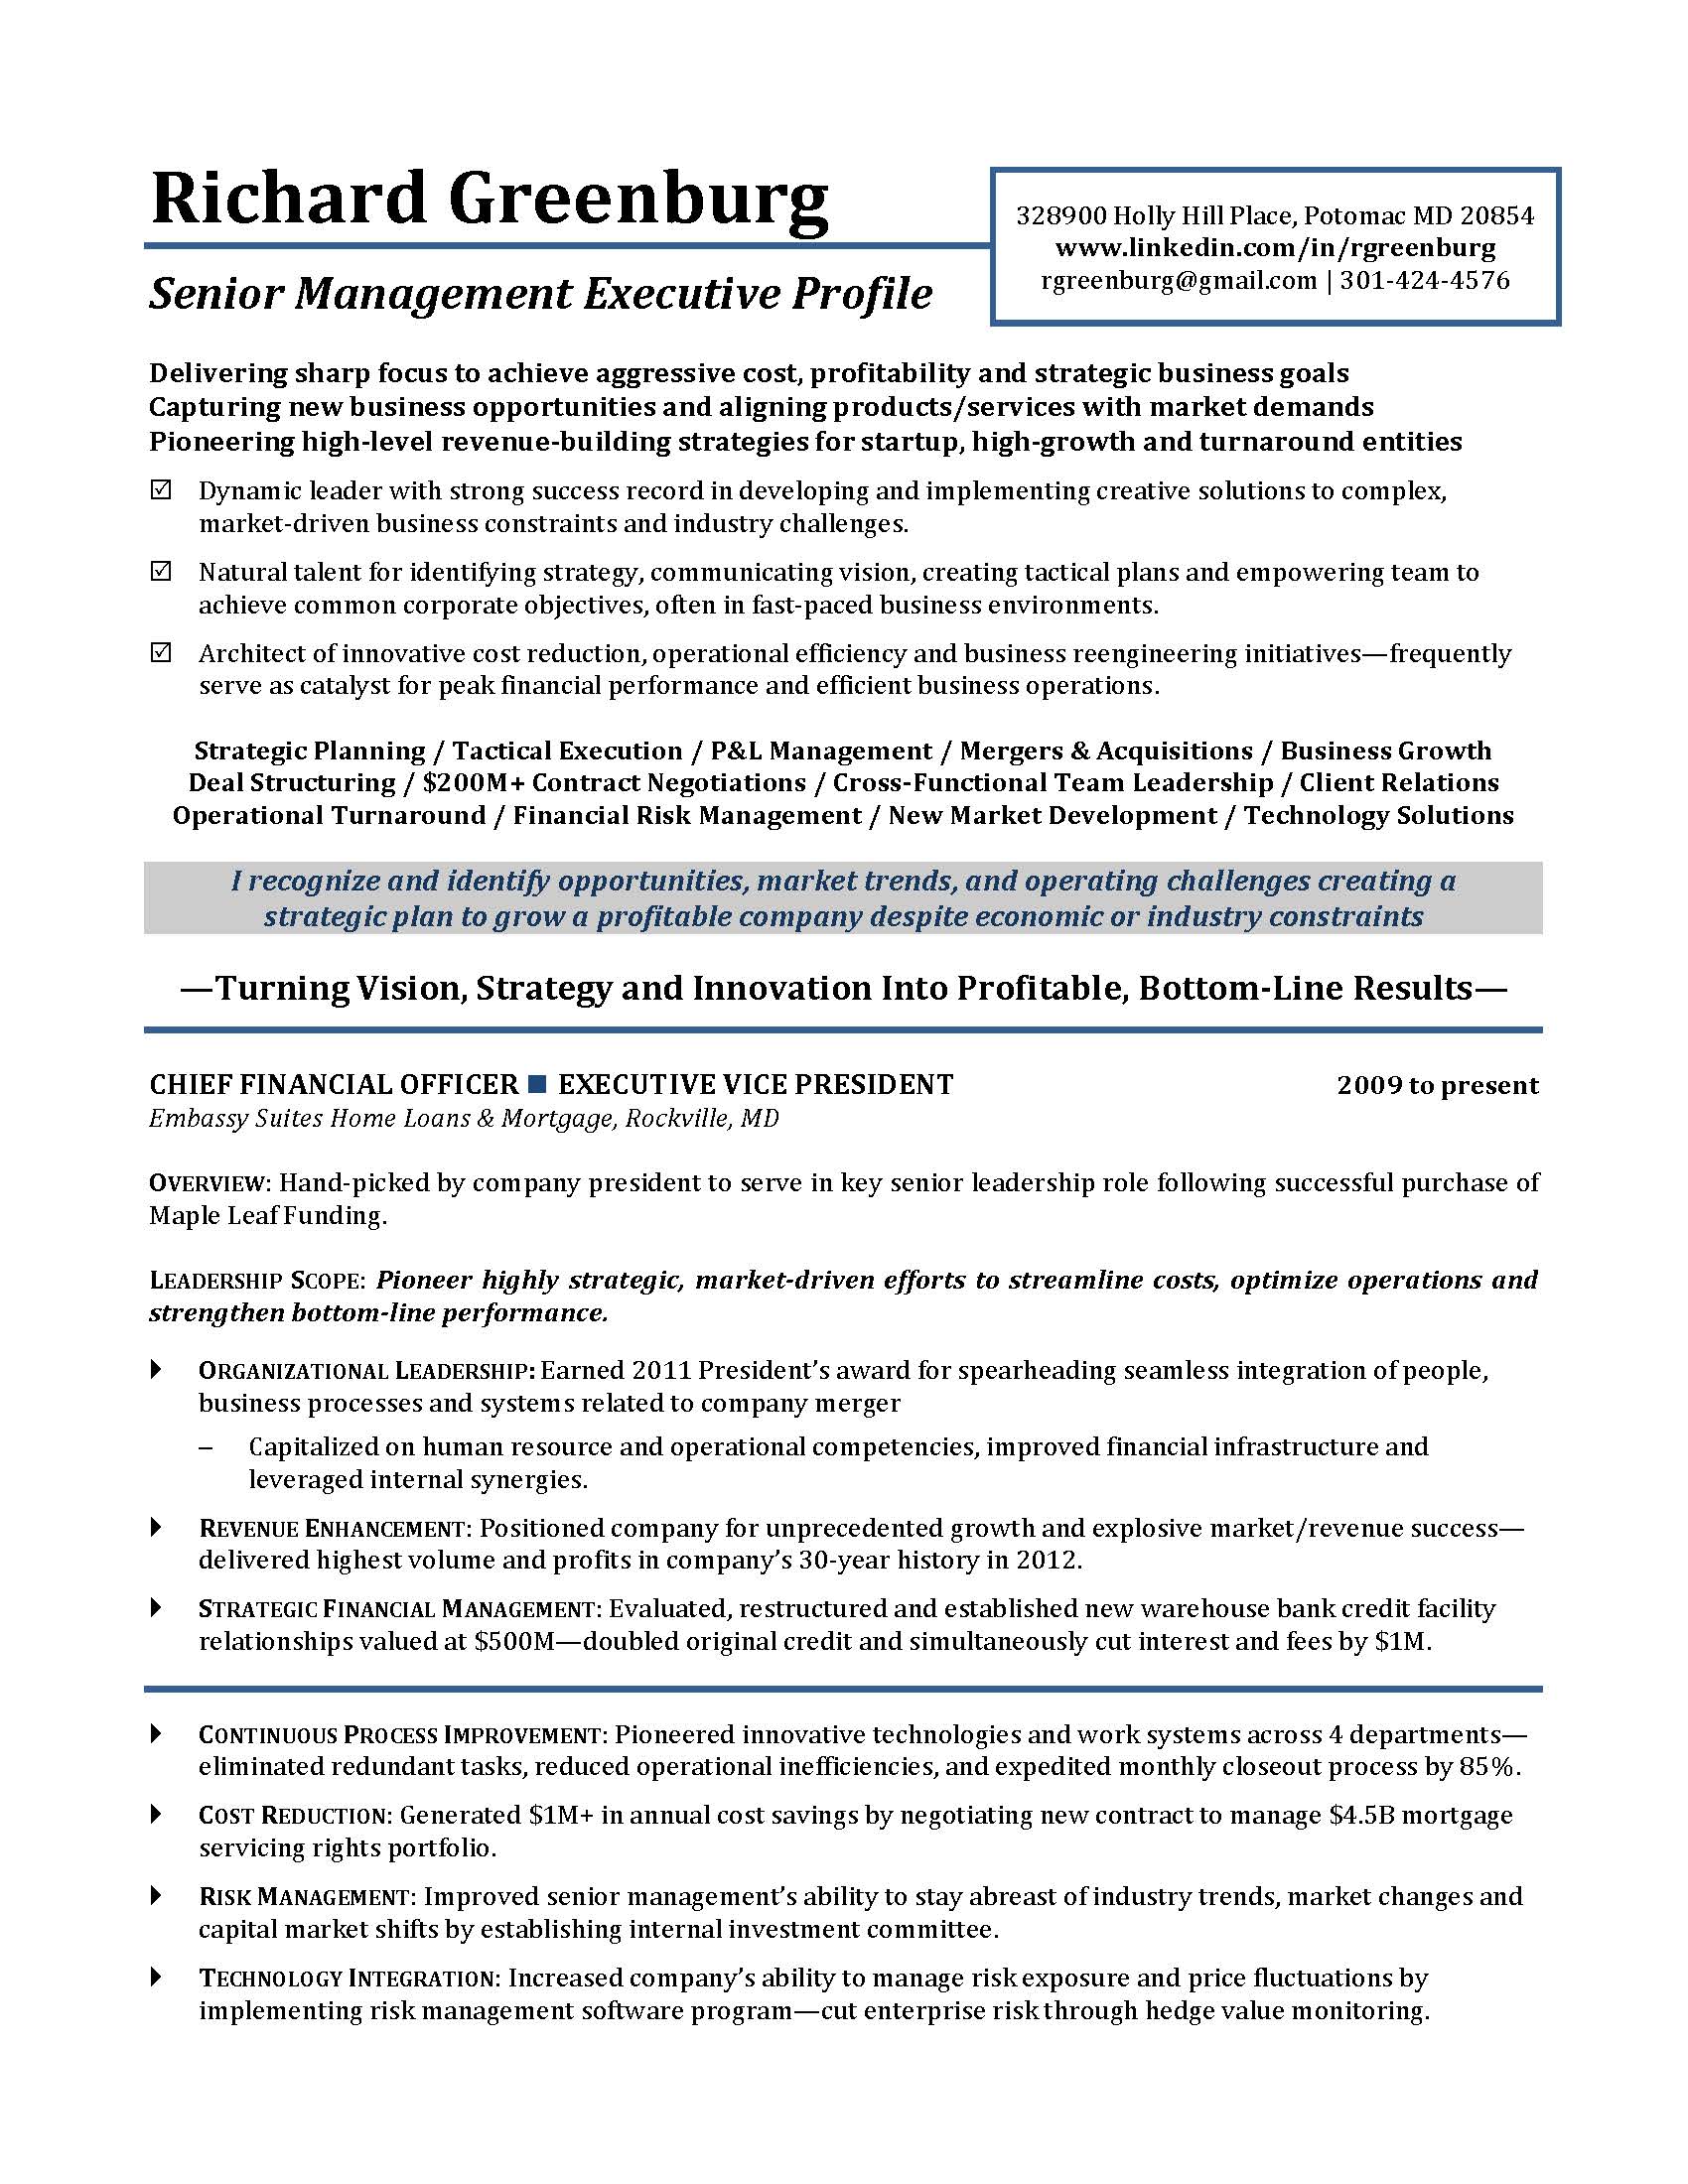 resume sample senior management